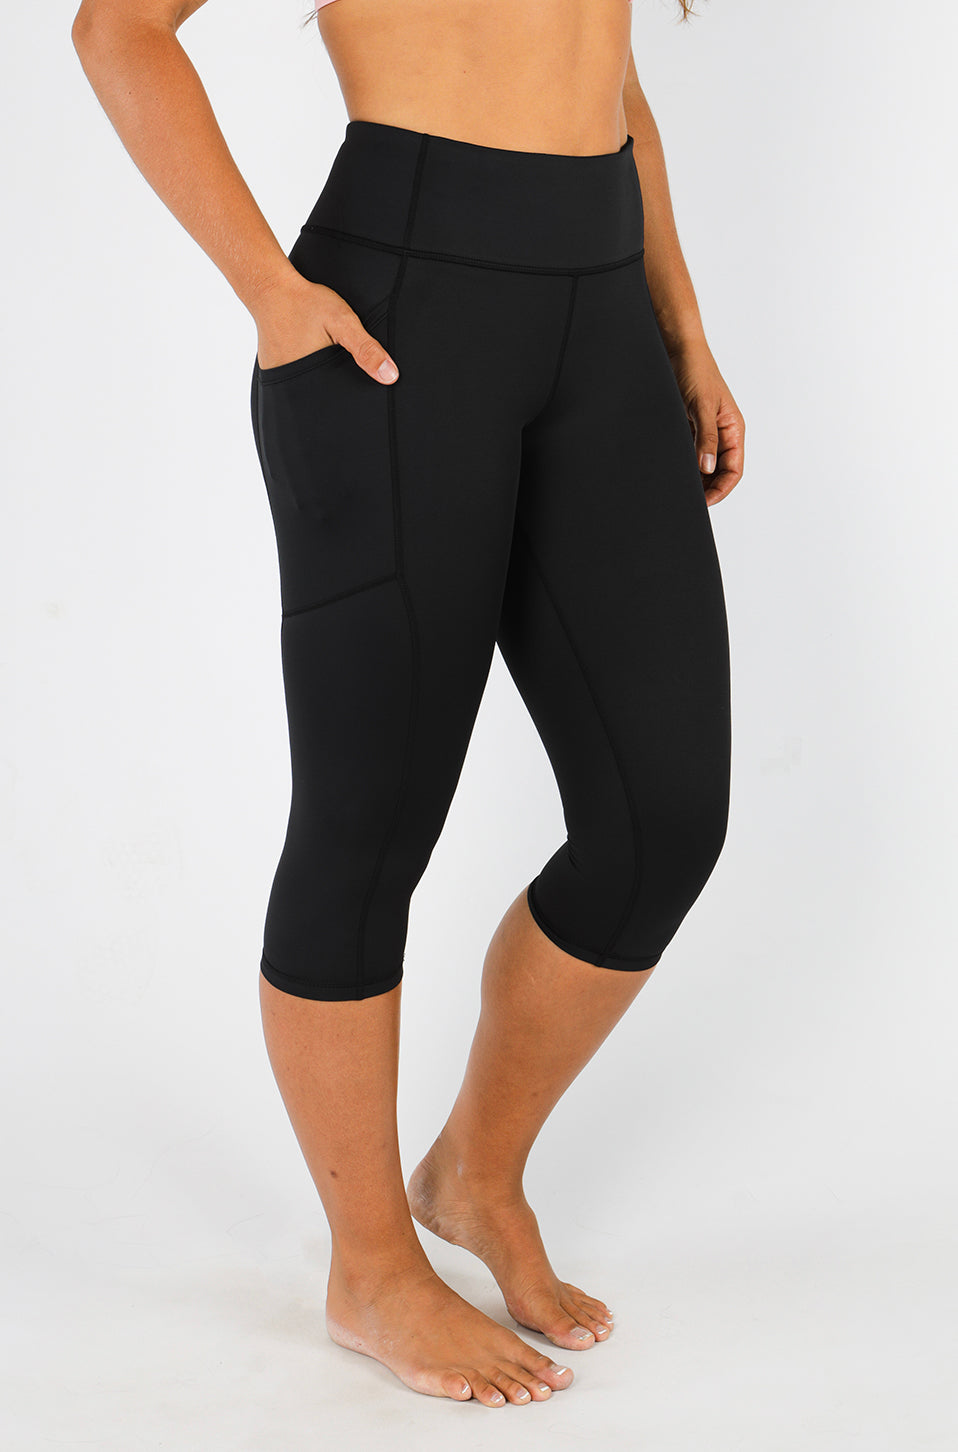 JGTDBPO Capri Leggings With Pockets For Women High Waisted Tummy Control  Workout Sports Running Capri Yoga Pants - Walmart.com